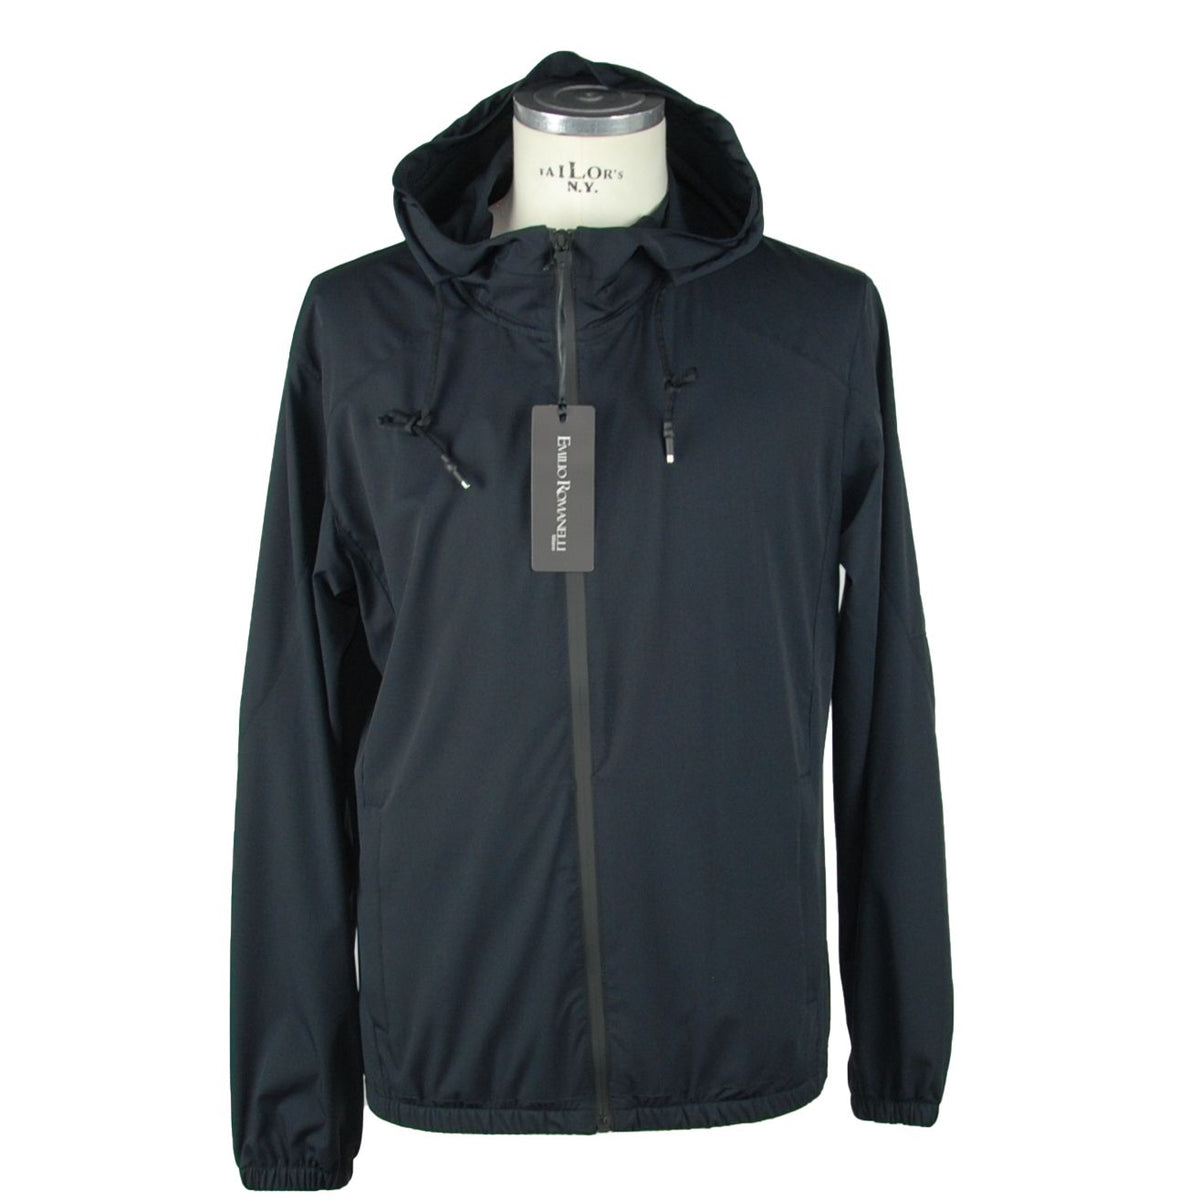 Emilio Romanelli Sleek Hooded Full Zip Jacket in Black